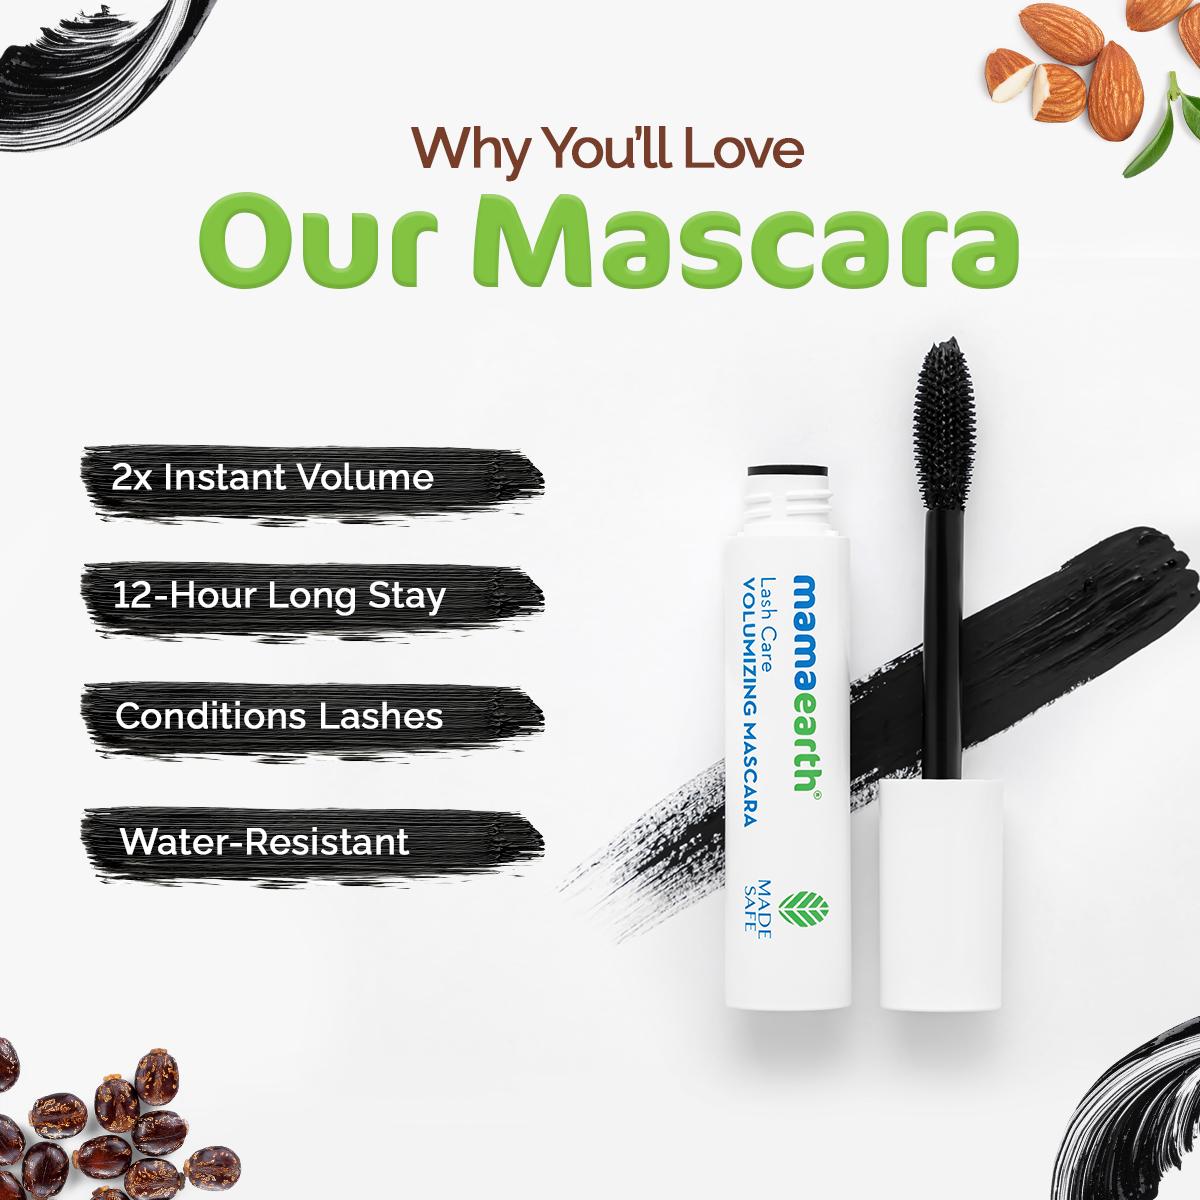 lash care volumizing mascara with castor oil & almond oil for 2x instant volume - 13 g